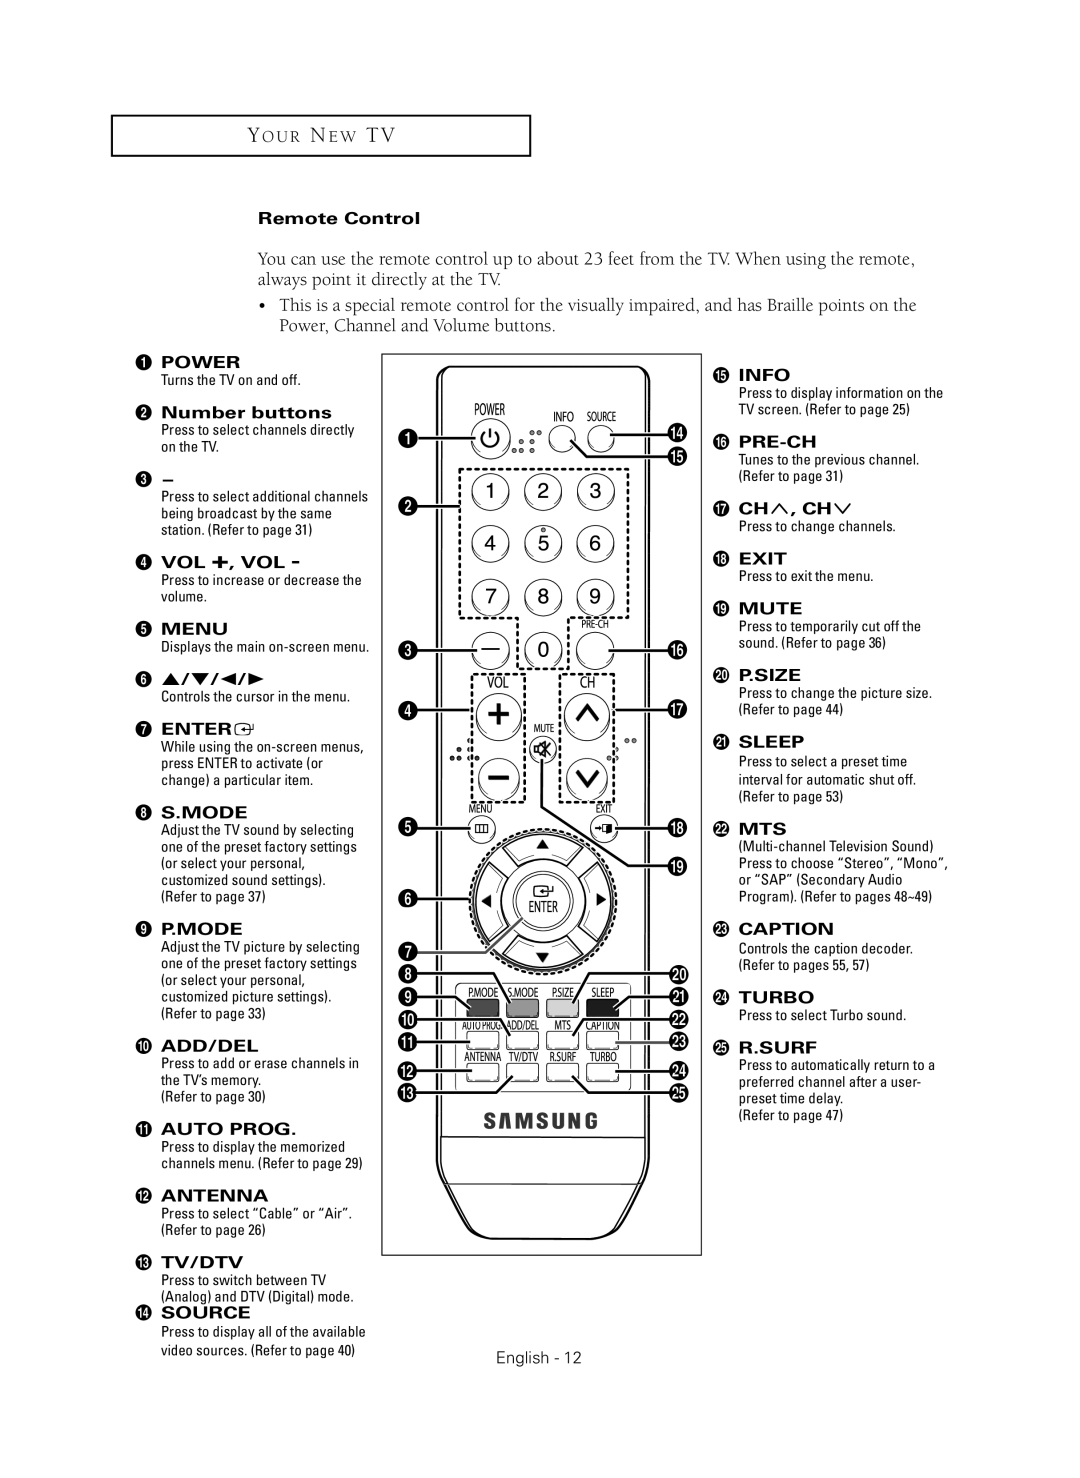 Samsung CL-29Z40MQ manual Remote Control, ´ Number buttons, ¨ Vol +, Vol, Menu, Ch , Ch 